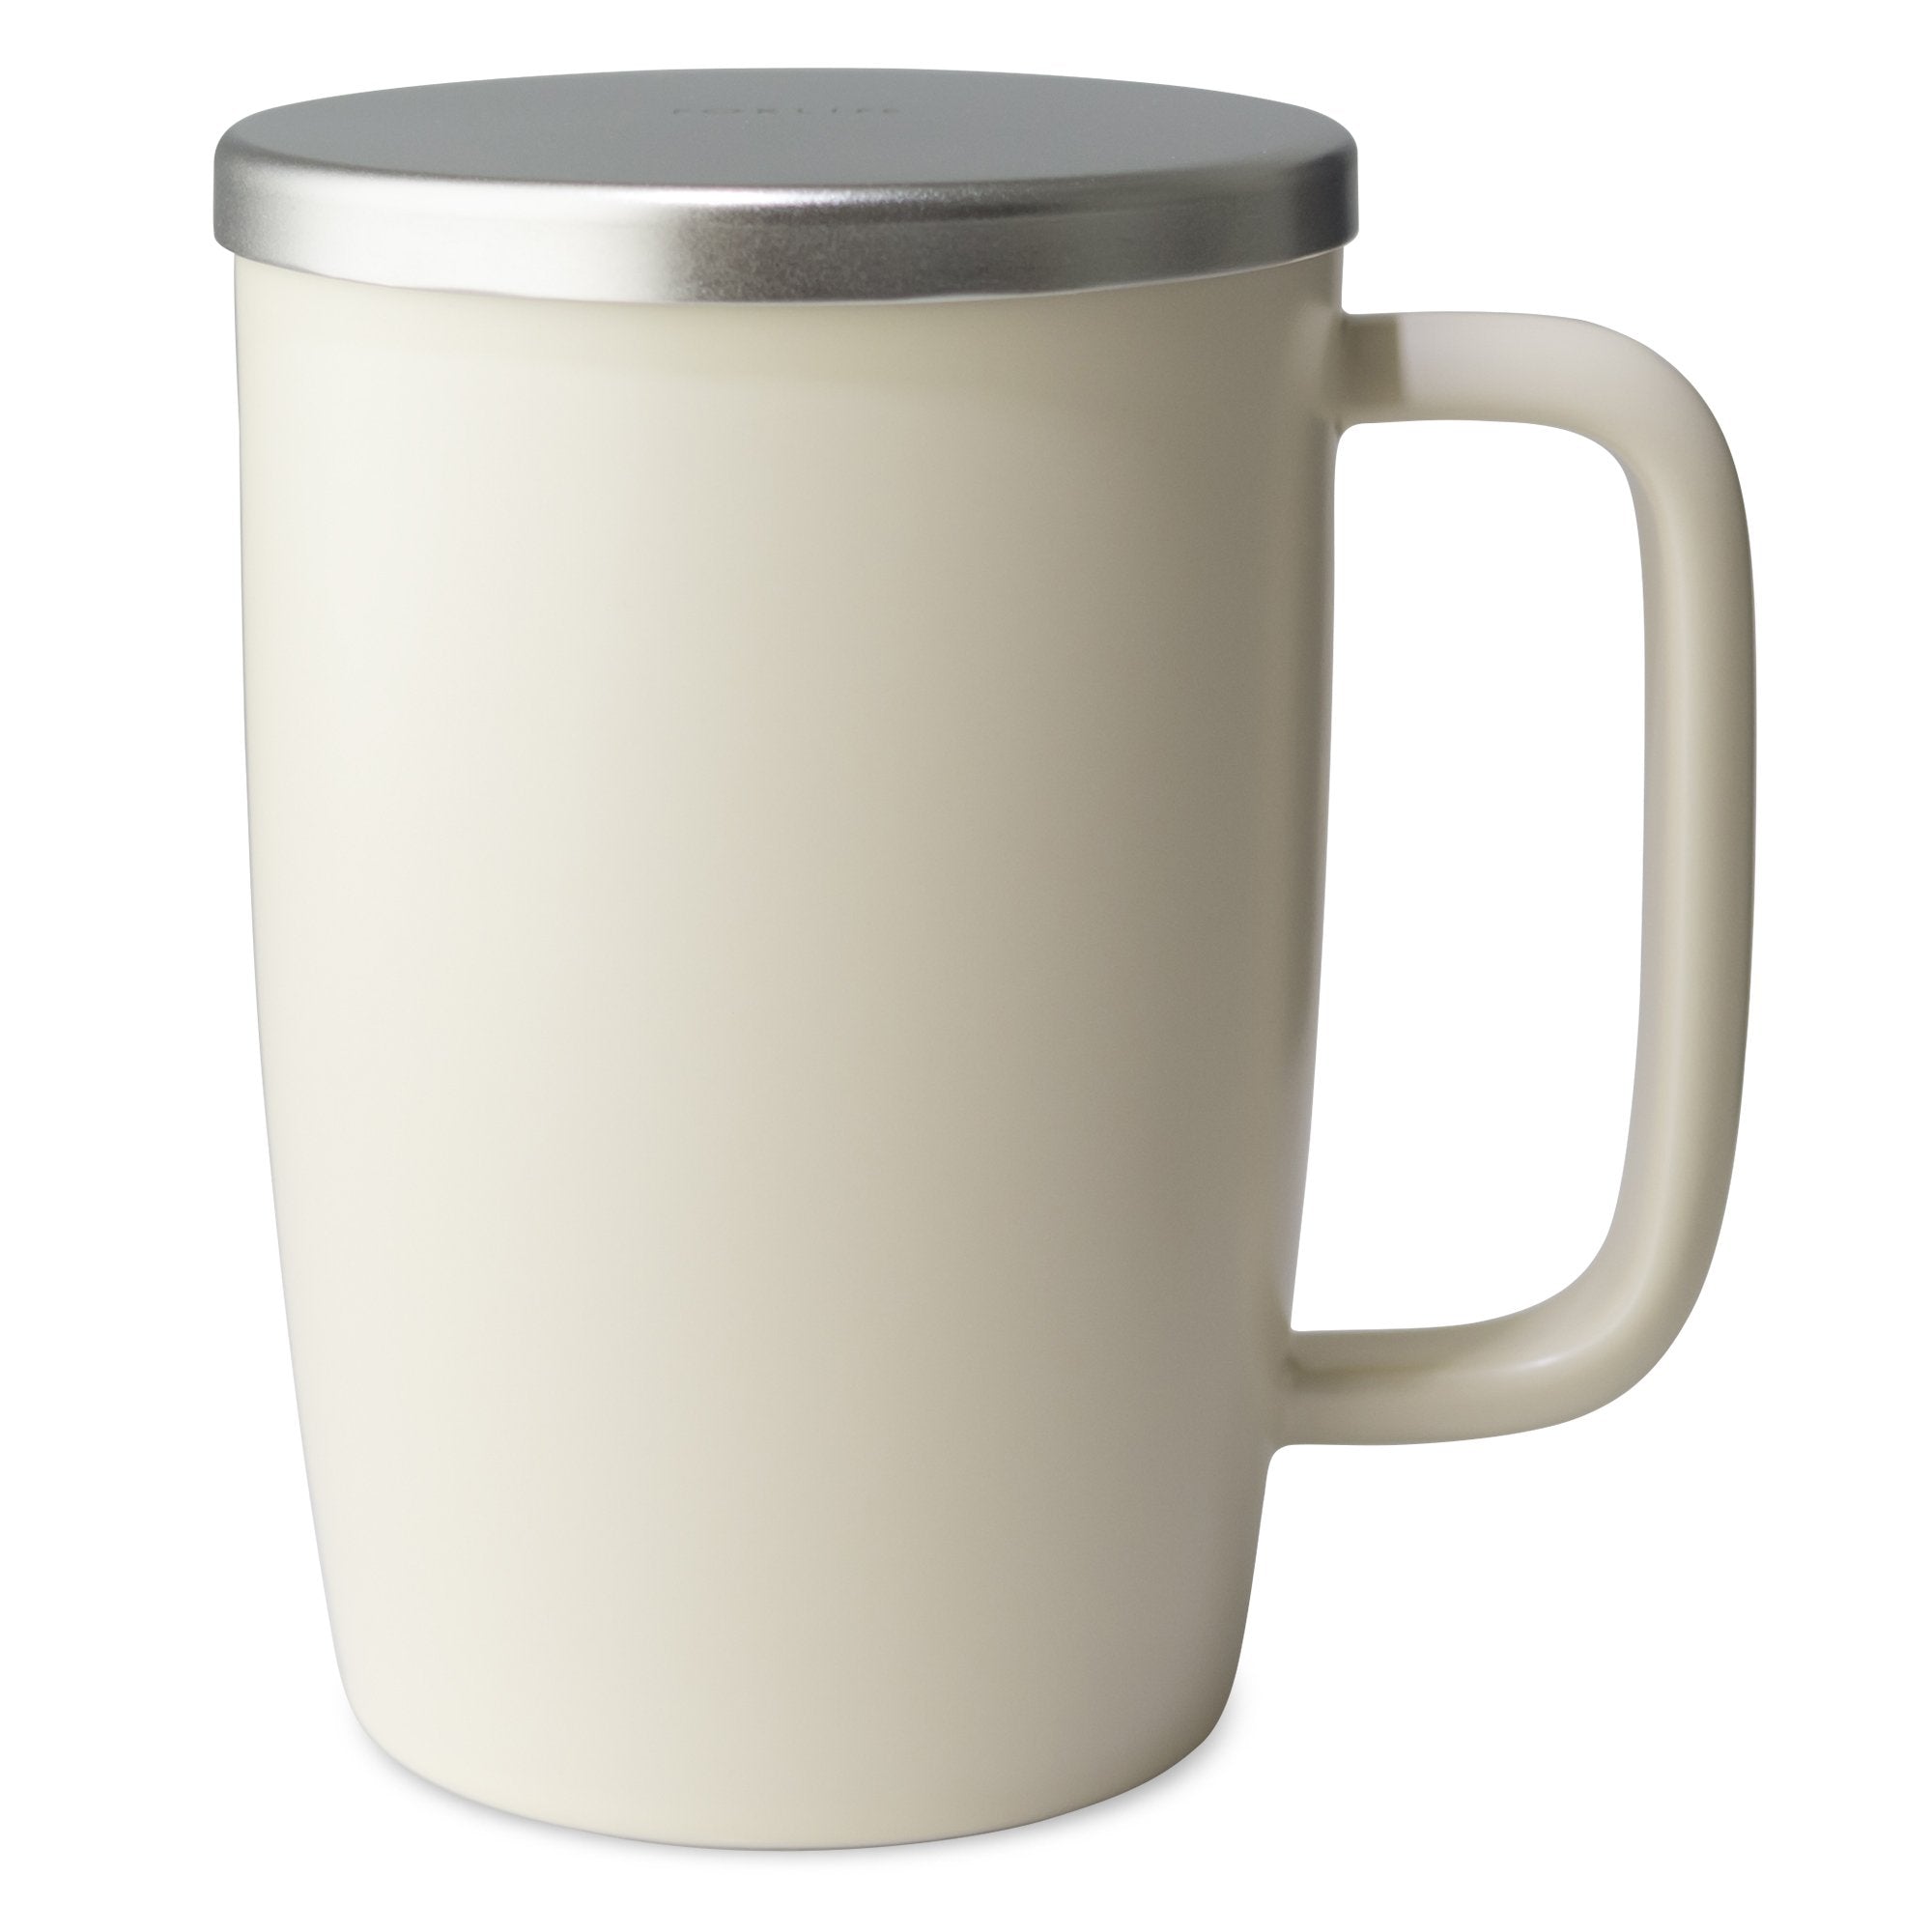 Large Ceramic Travel Mug With Handle Lid and Tea Infuser, 24 Oz